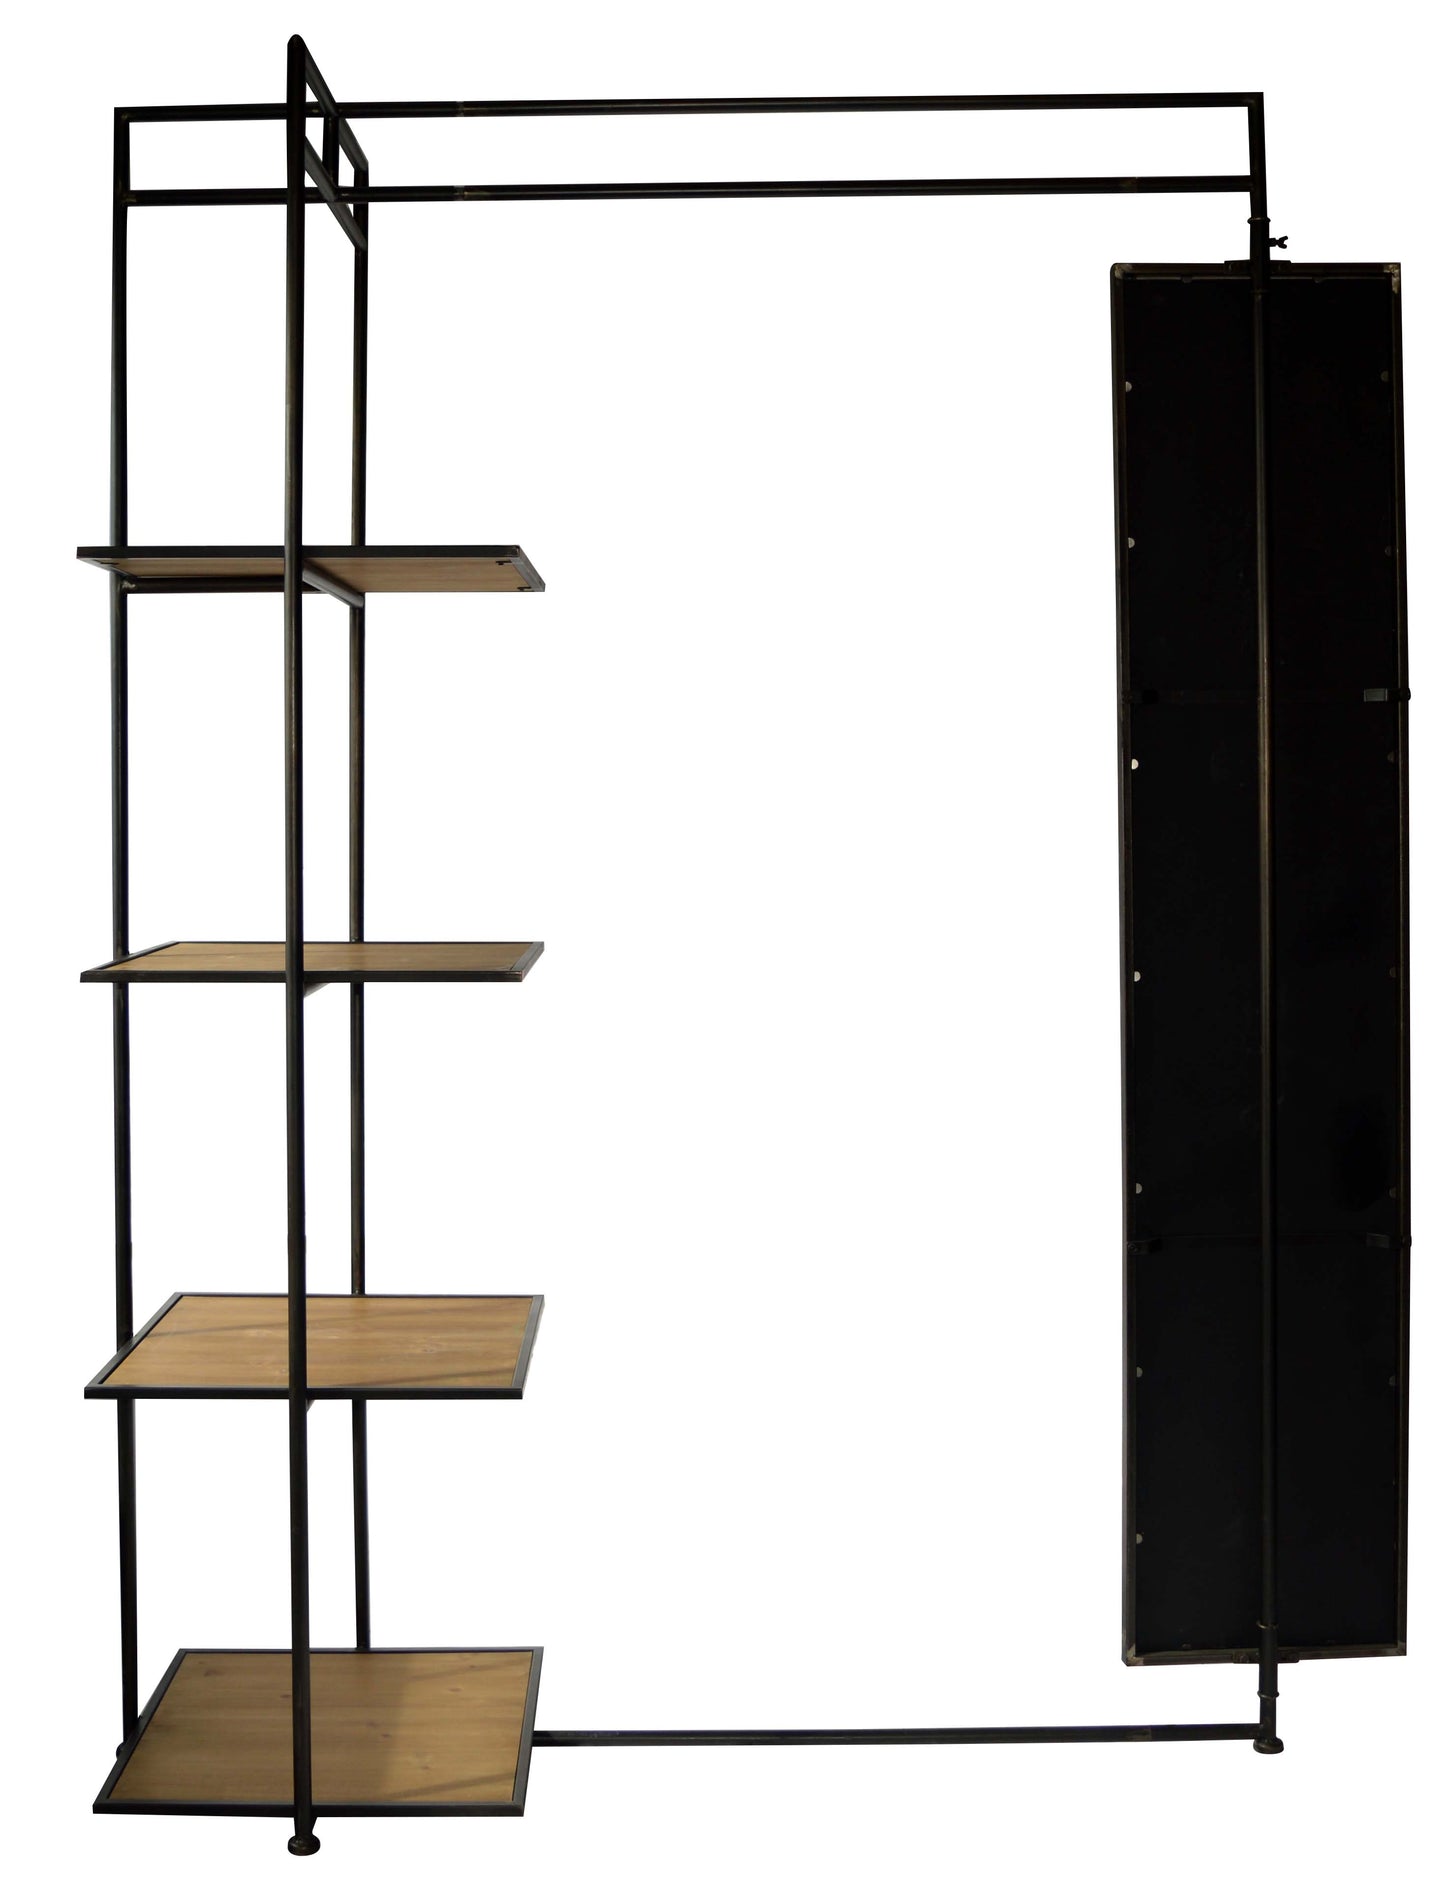 Garderobe mit Spiegel - Abbi Iron coat rack with mirror and wooden shelve